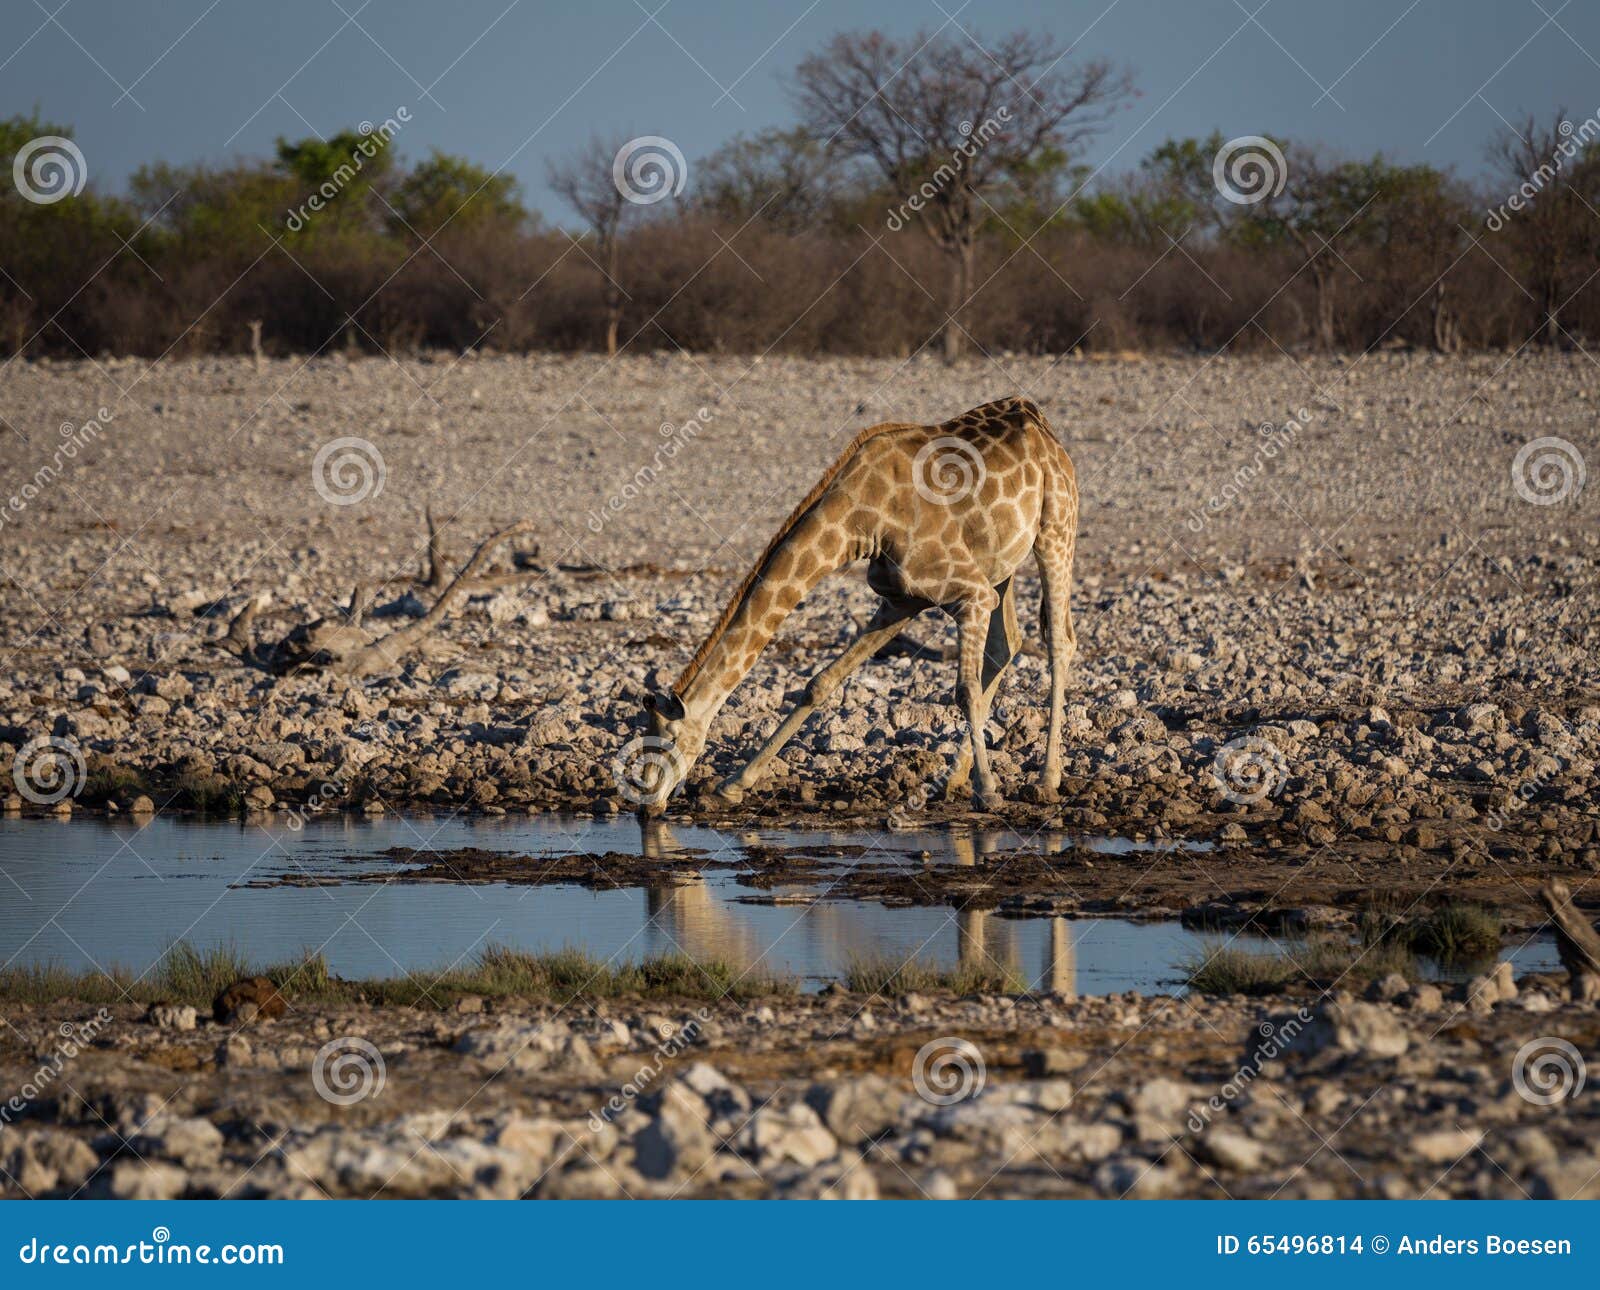 angolan giraffe drinking at waterhole.